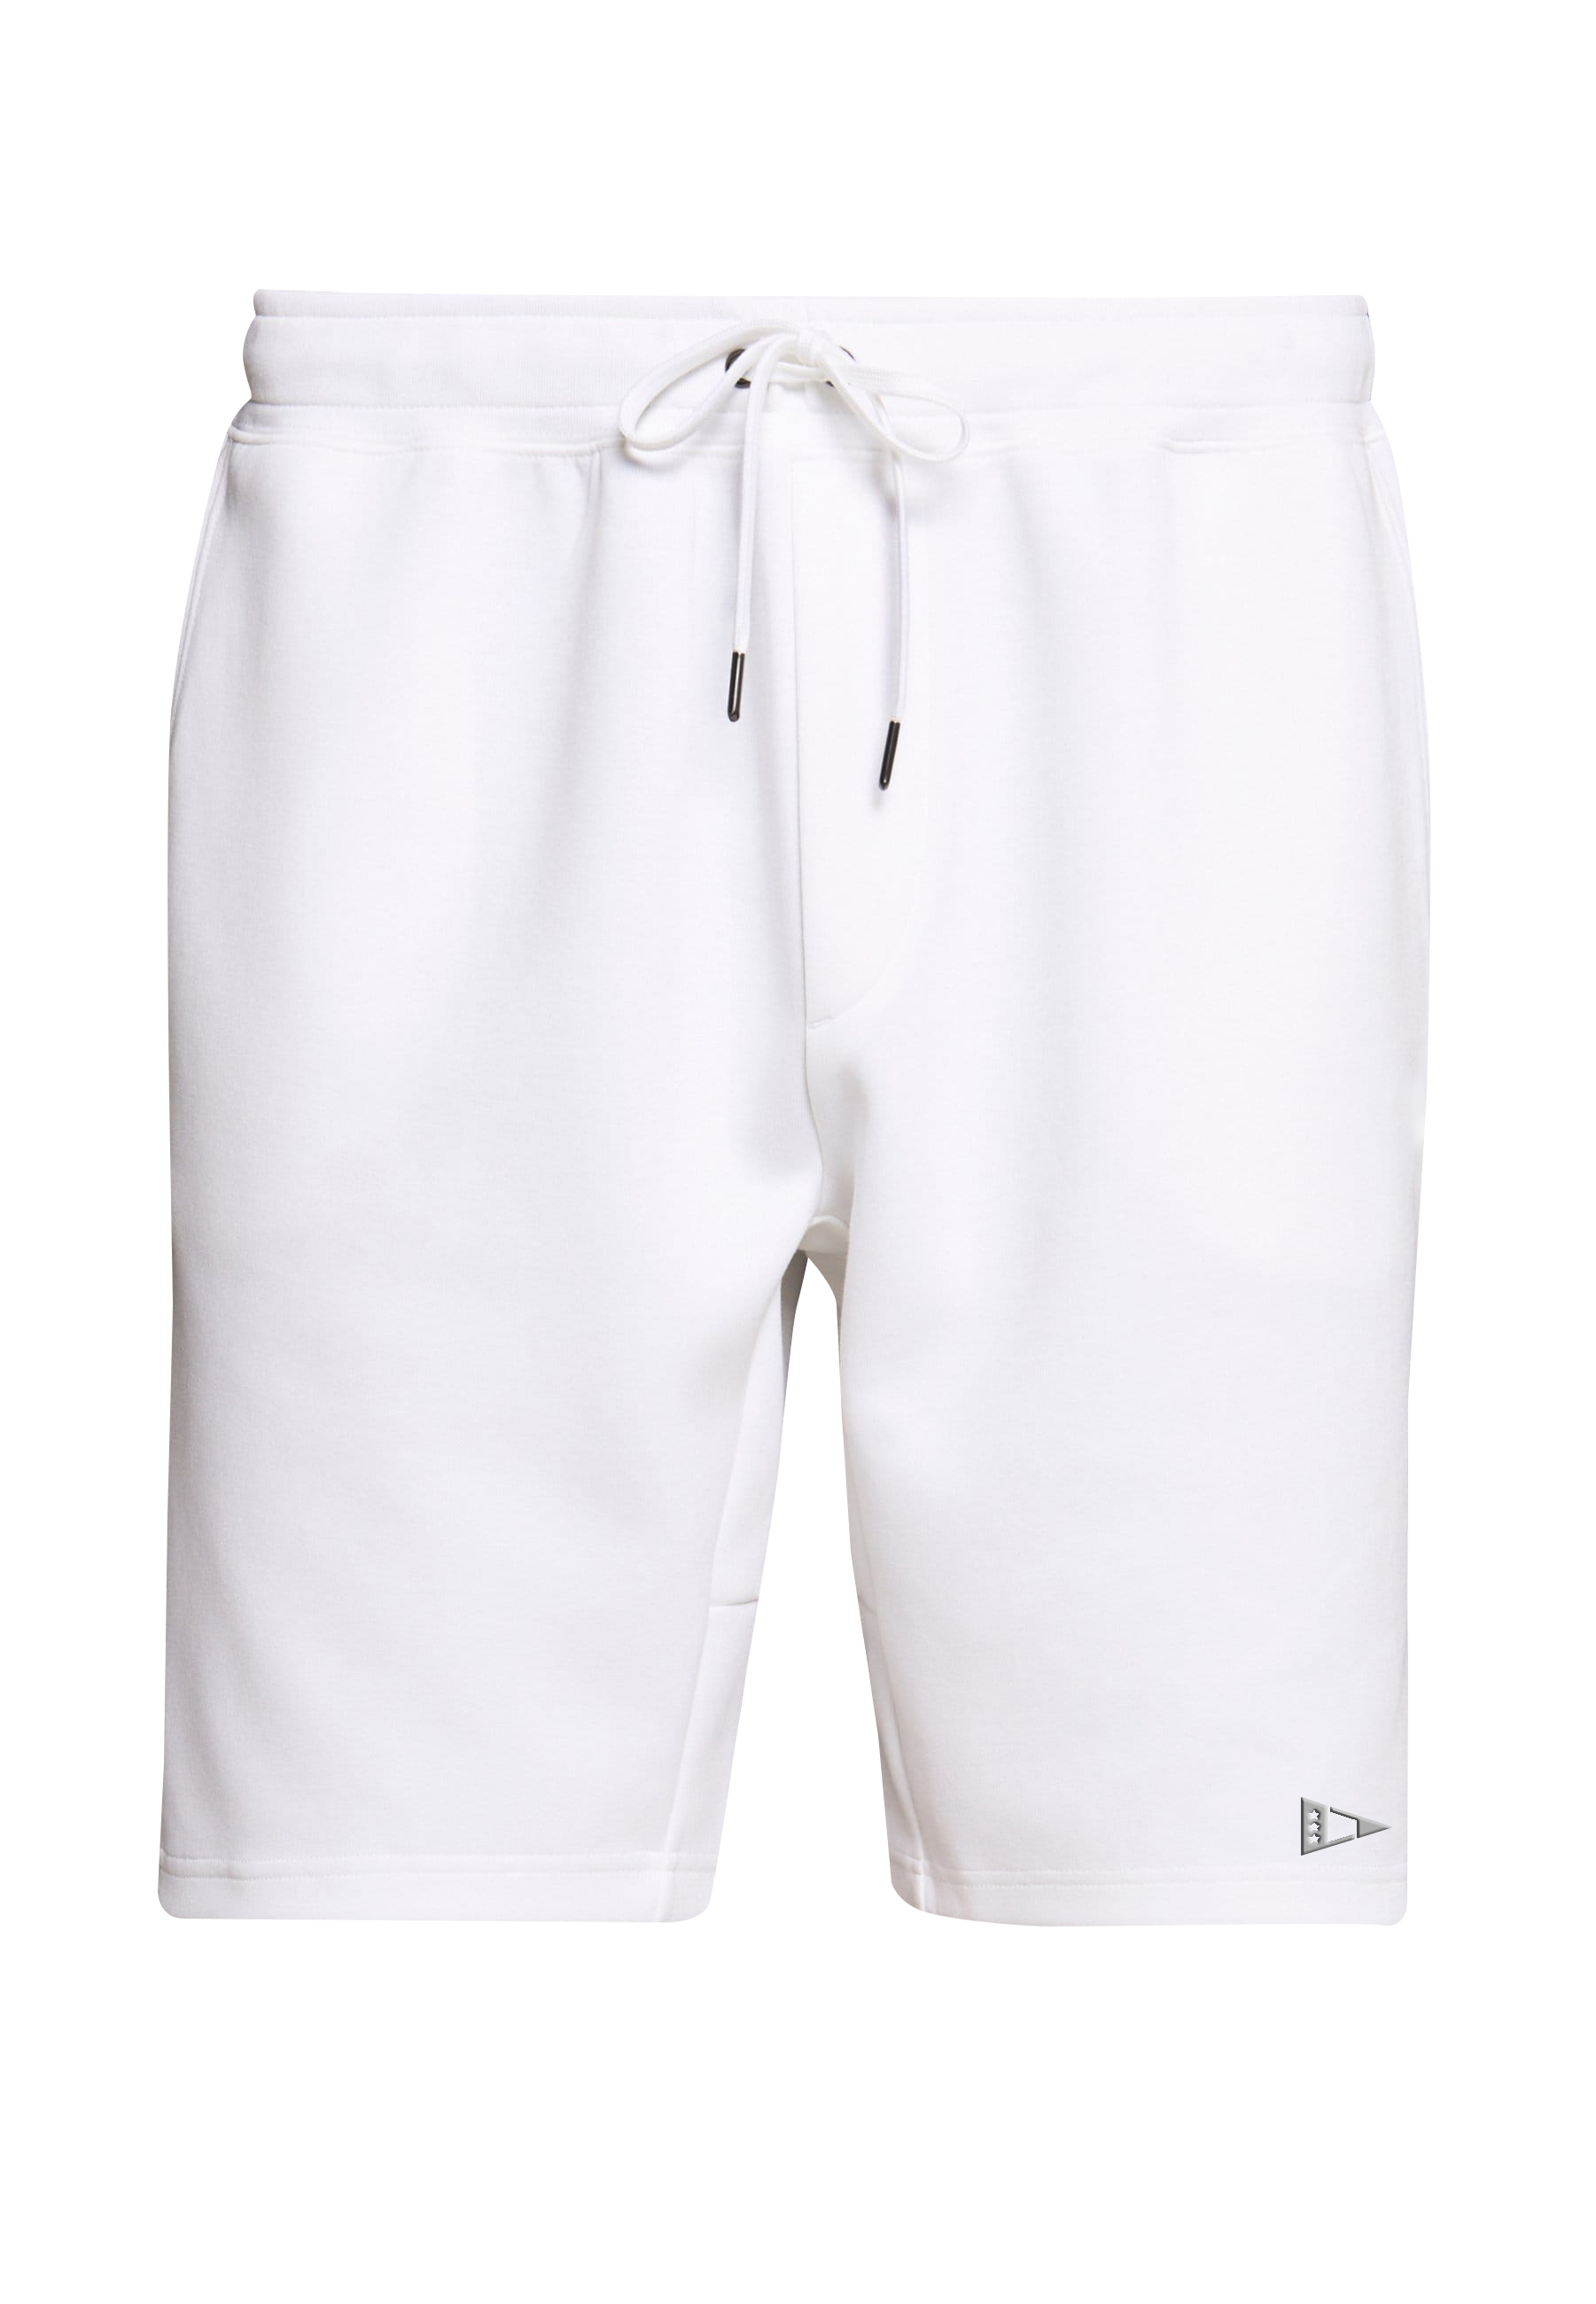 Спортивные шорты мужские Scuola Nautica Italiana 018510 белые XL